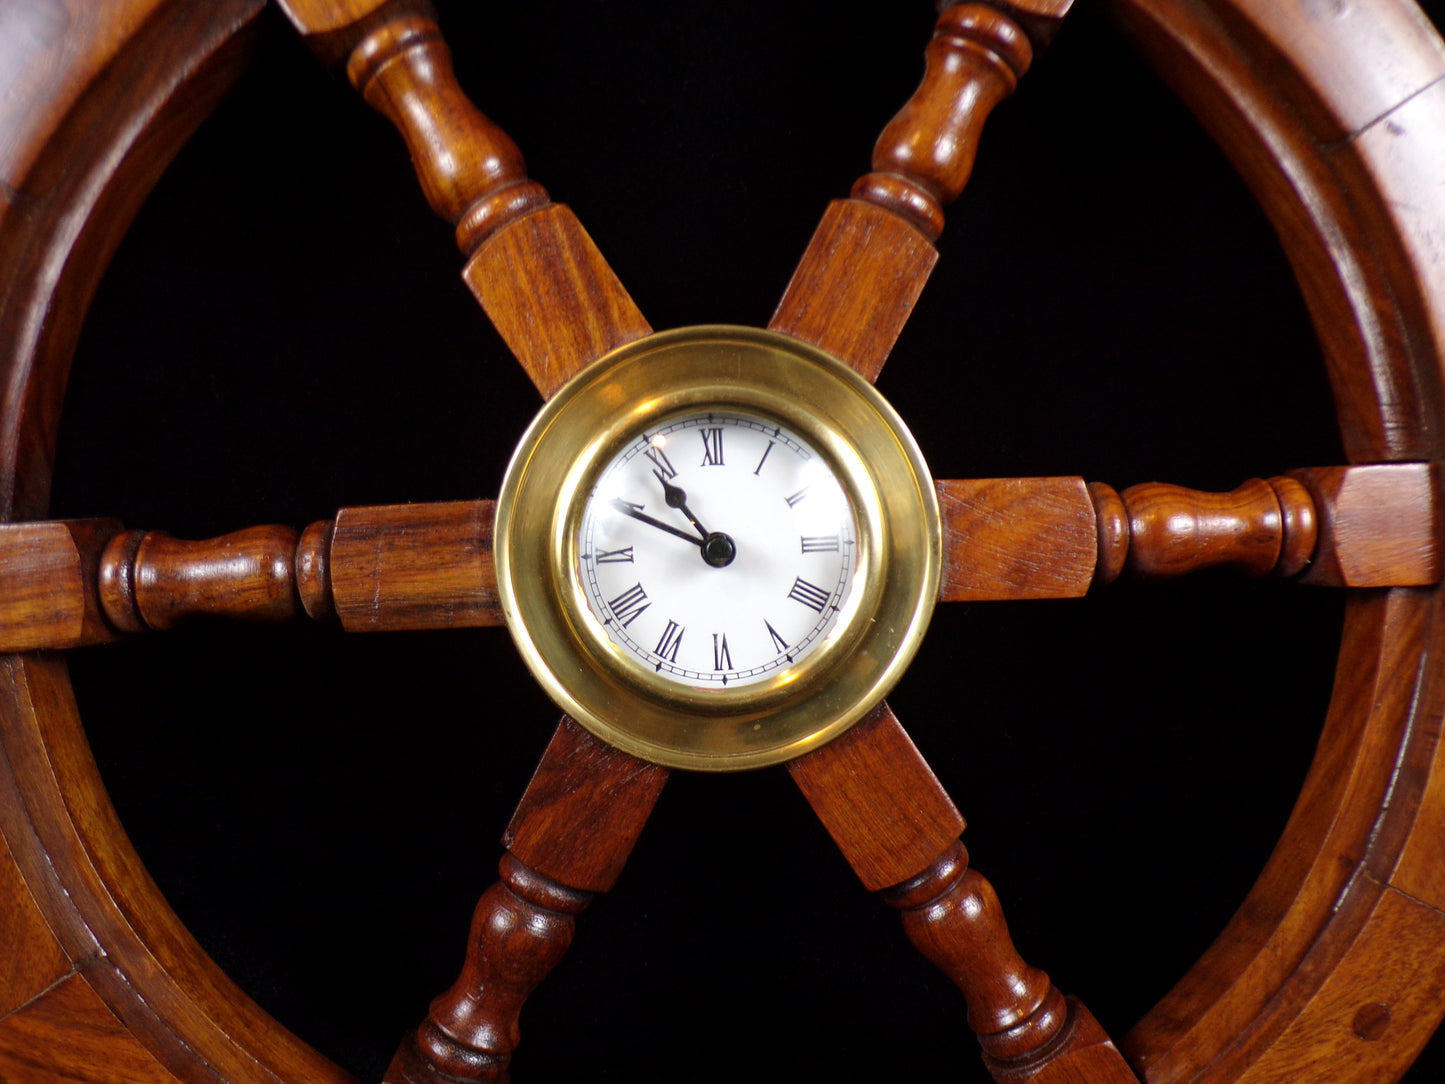 Ship's Wheel with Digital Clock